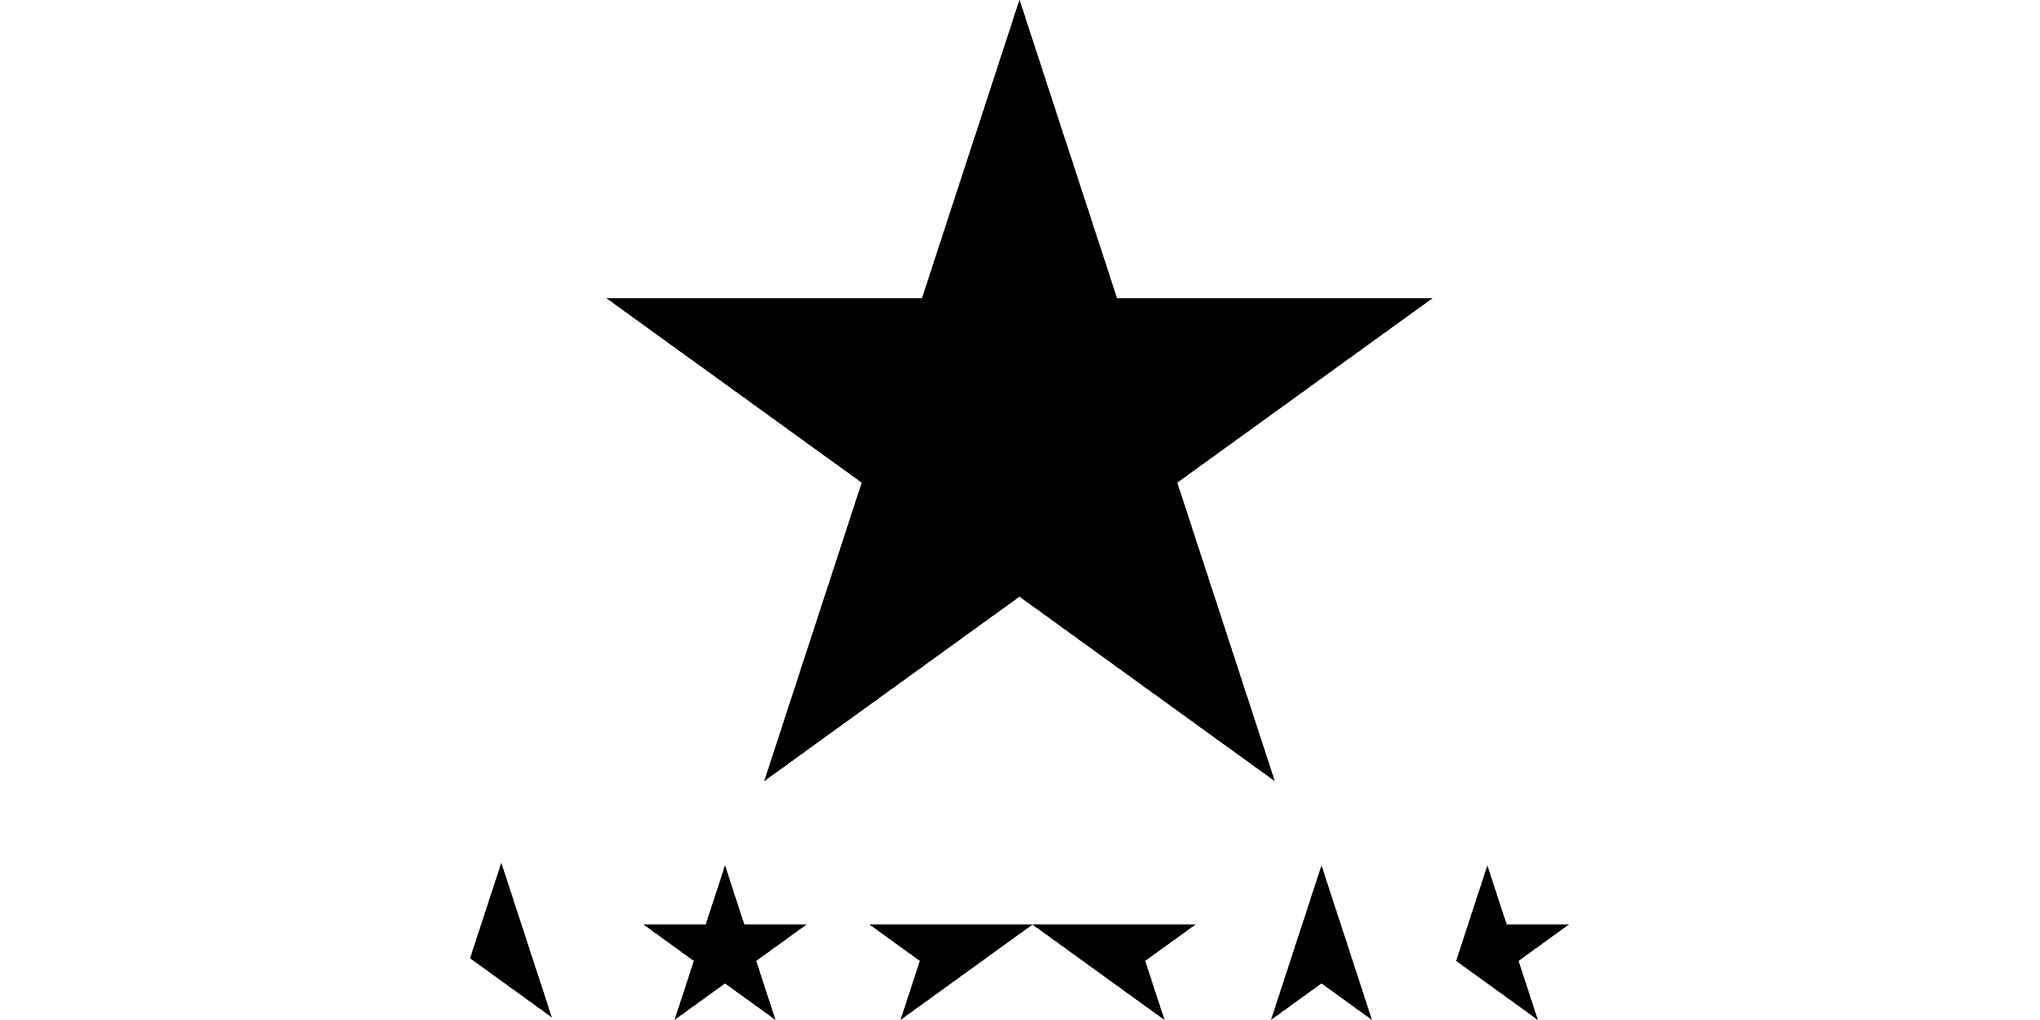 Bowie_Blackstar_2-1-lede.png